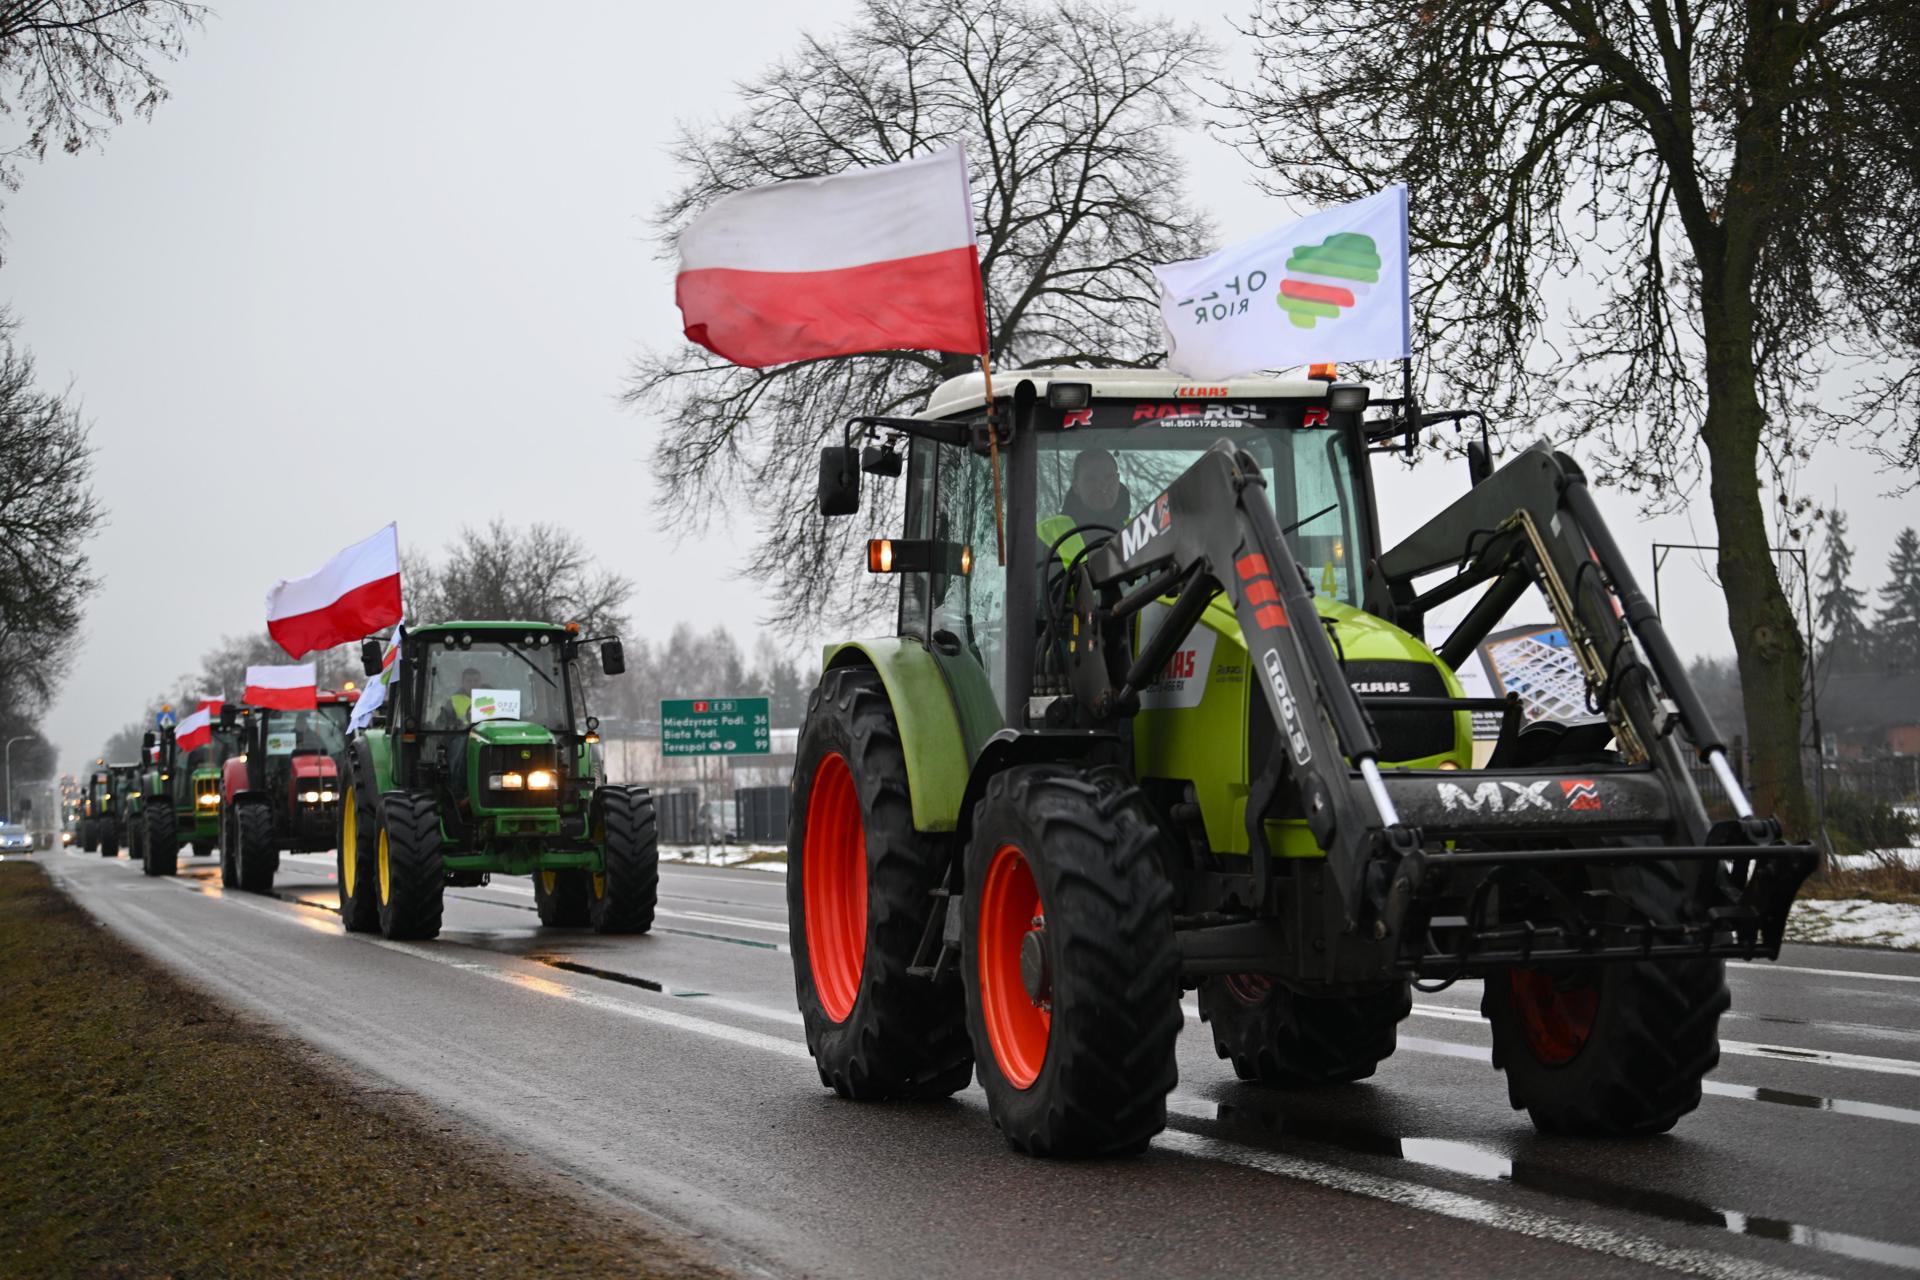 Agricultores polacos se manifiestan contra la política agraria de la UE en Zbuczyn (Polonia). Efeagro/EPA/Przemyslaw Piatkowski